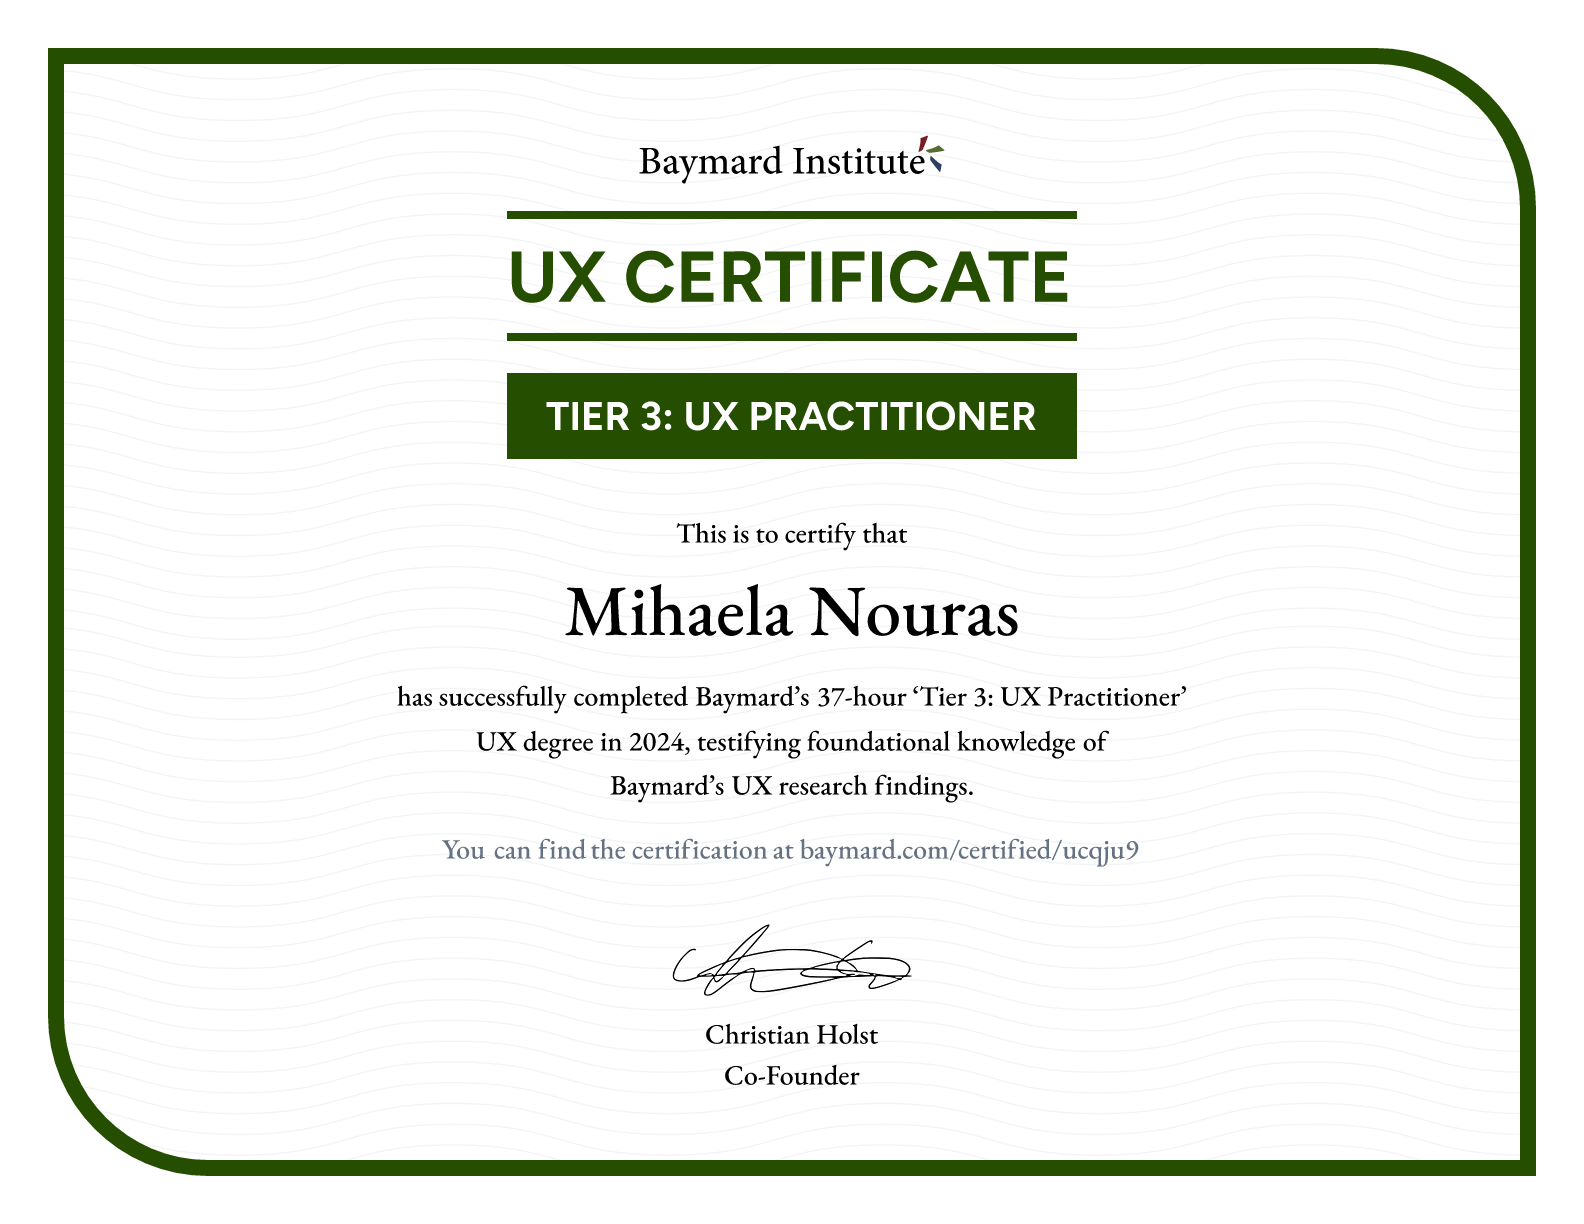 Mihaela Nouras’s certificate